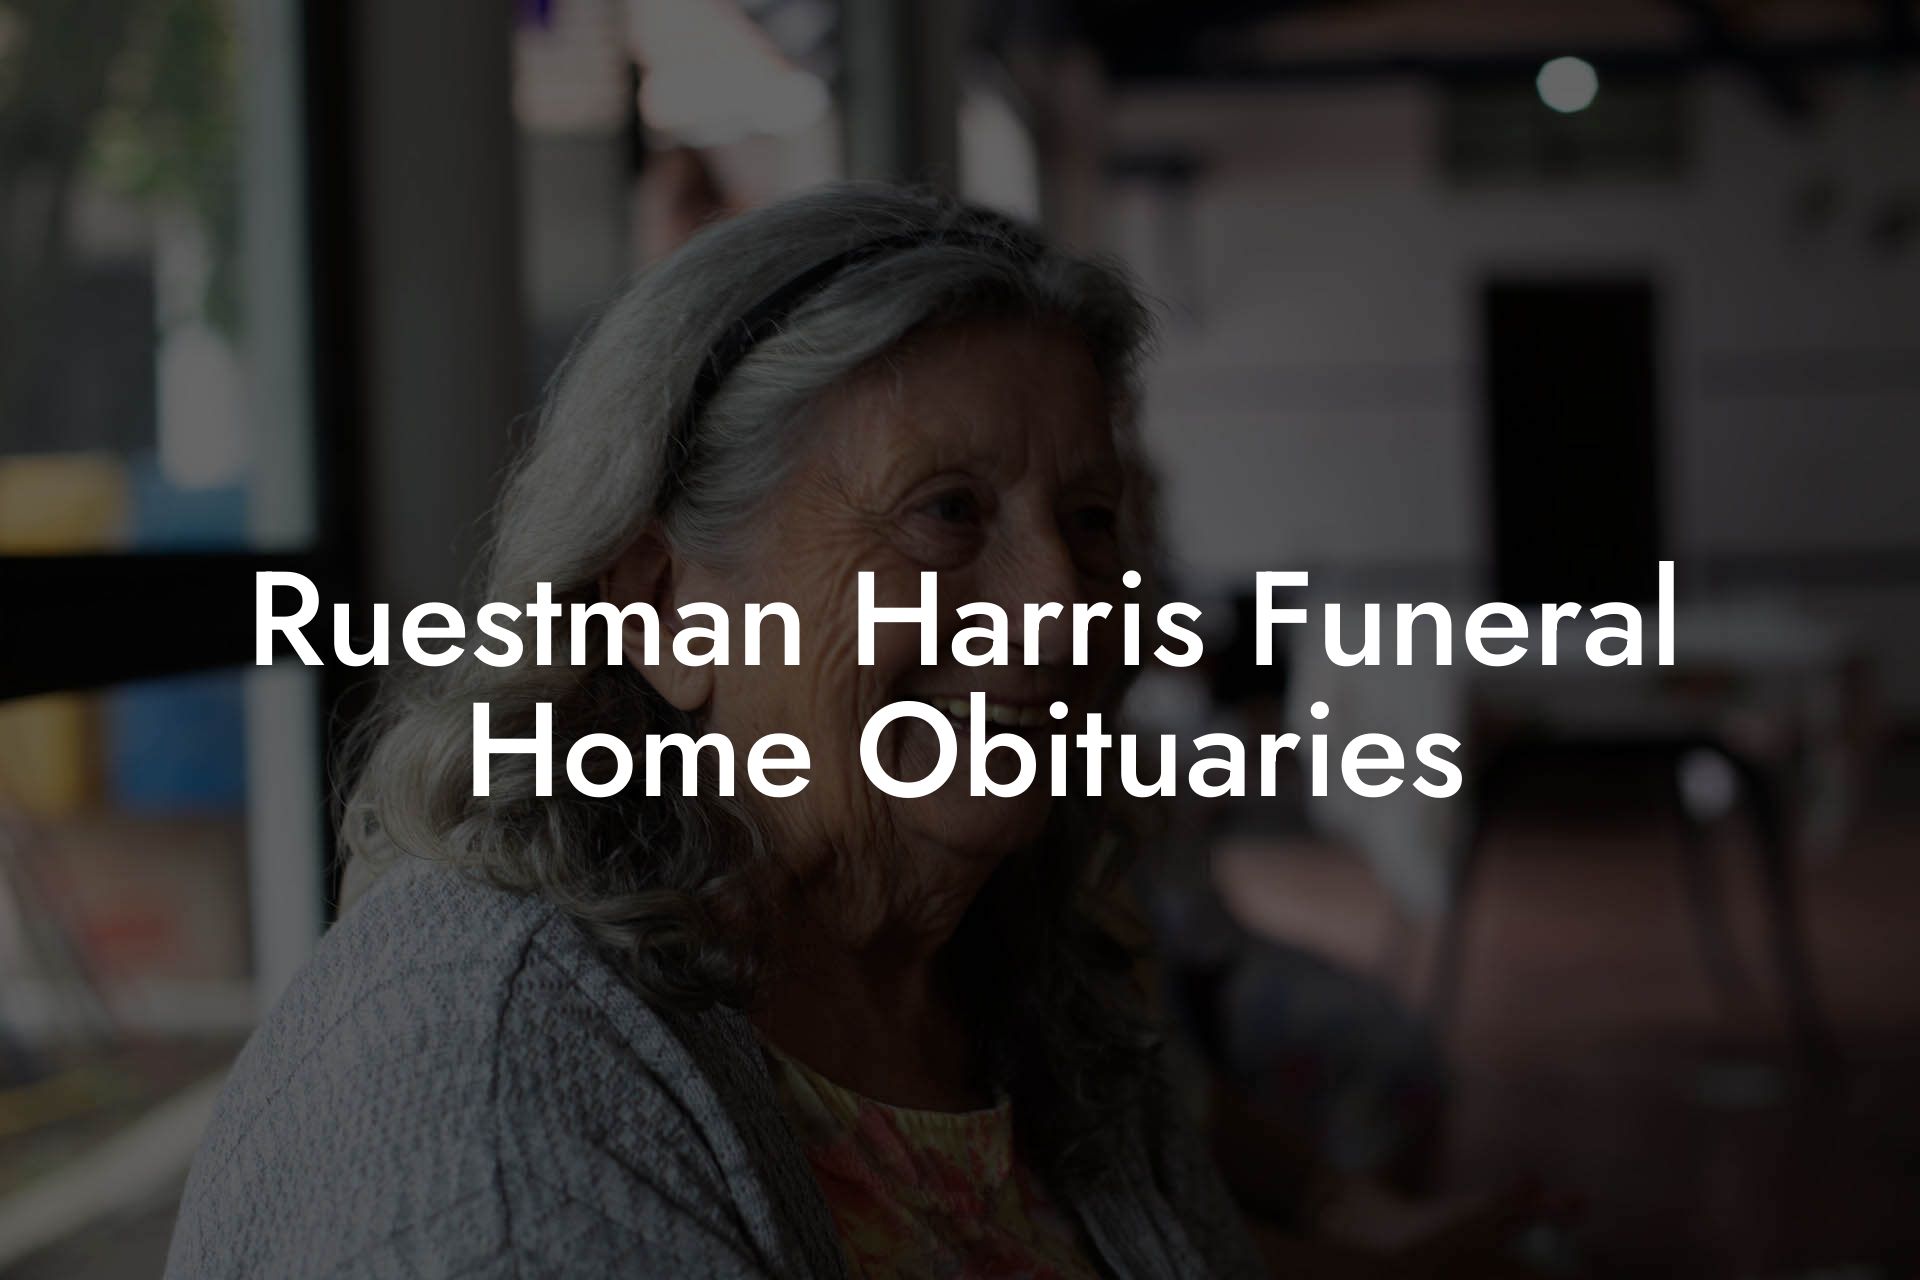 Ruestman Harris Funeral Home Obituaries